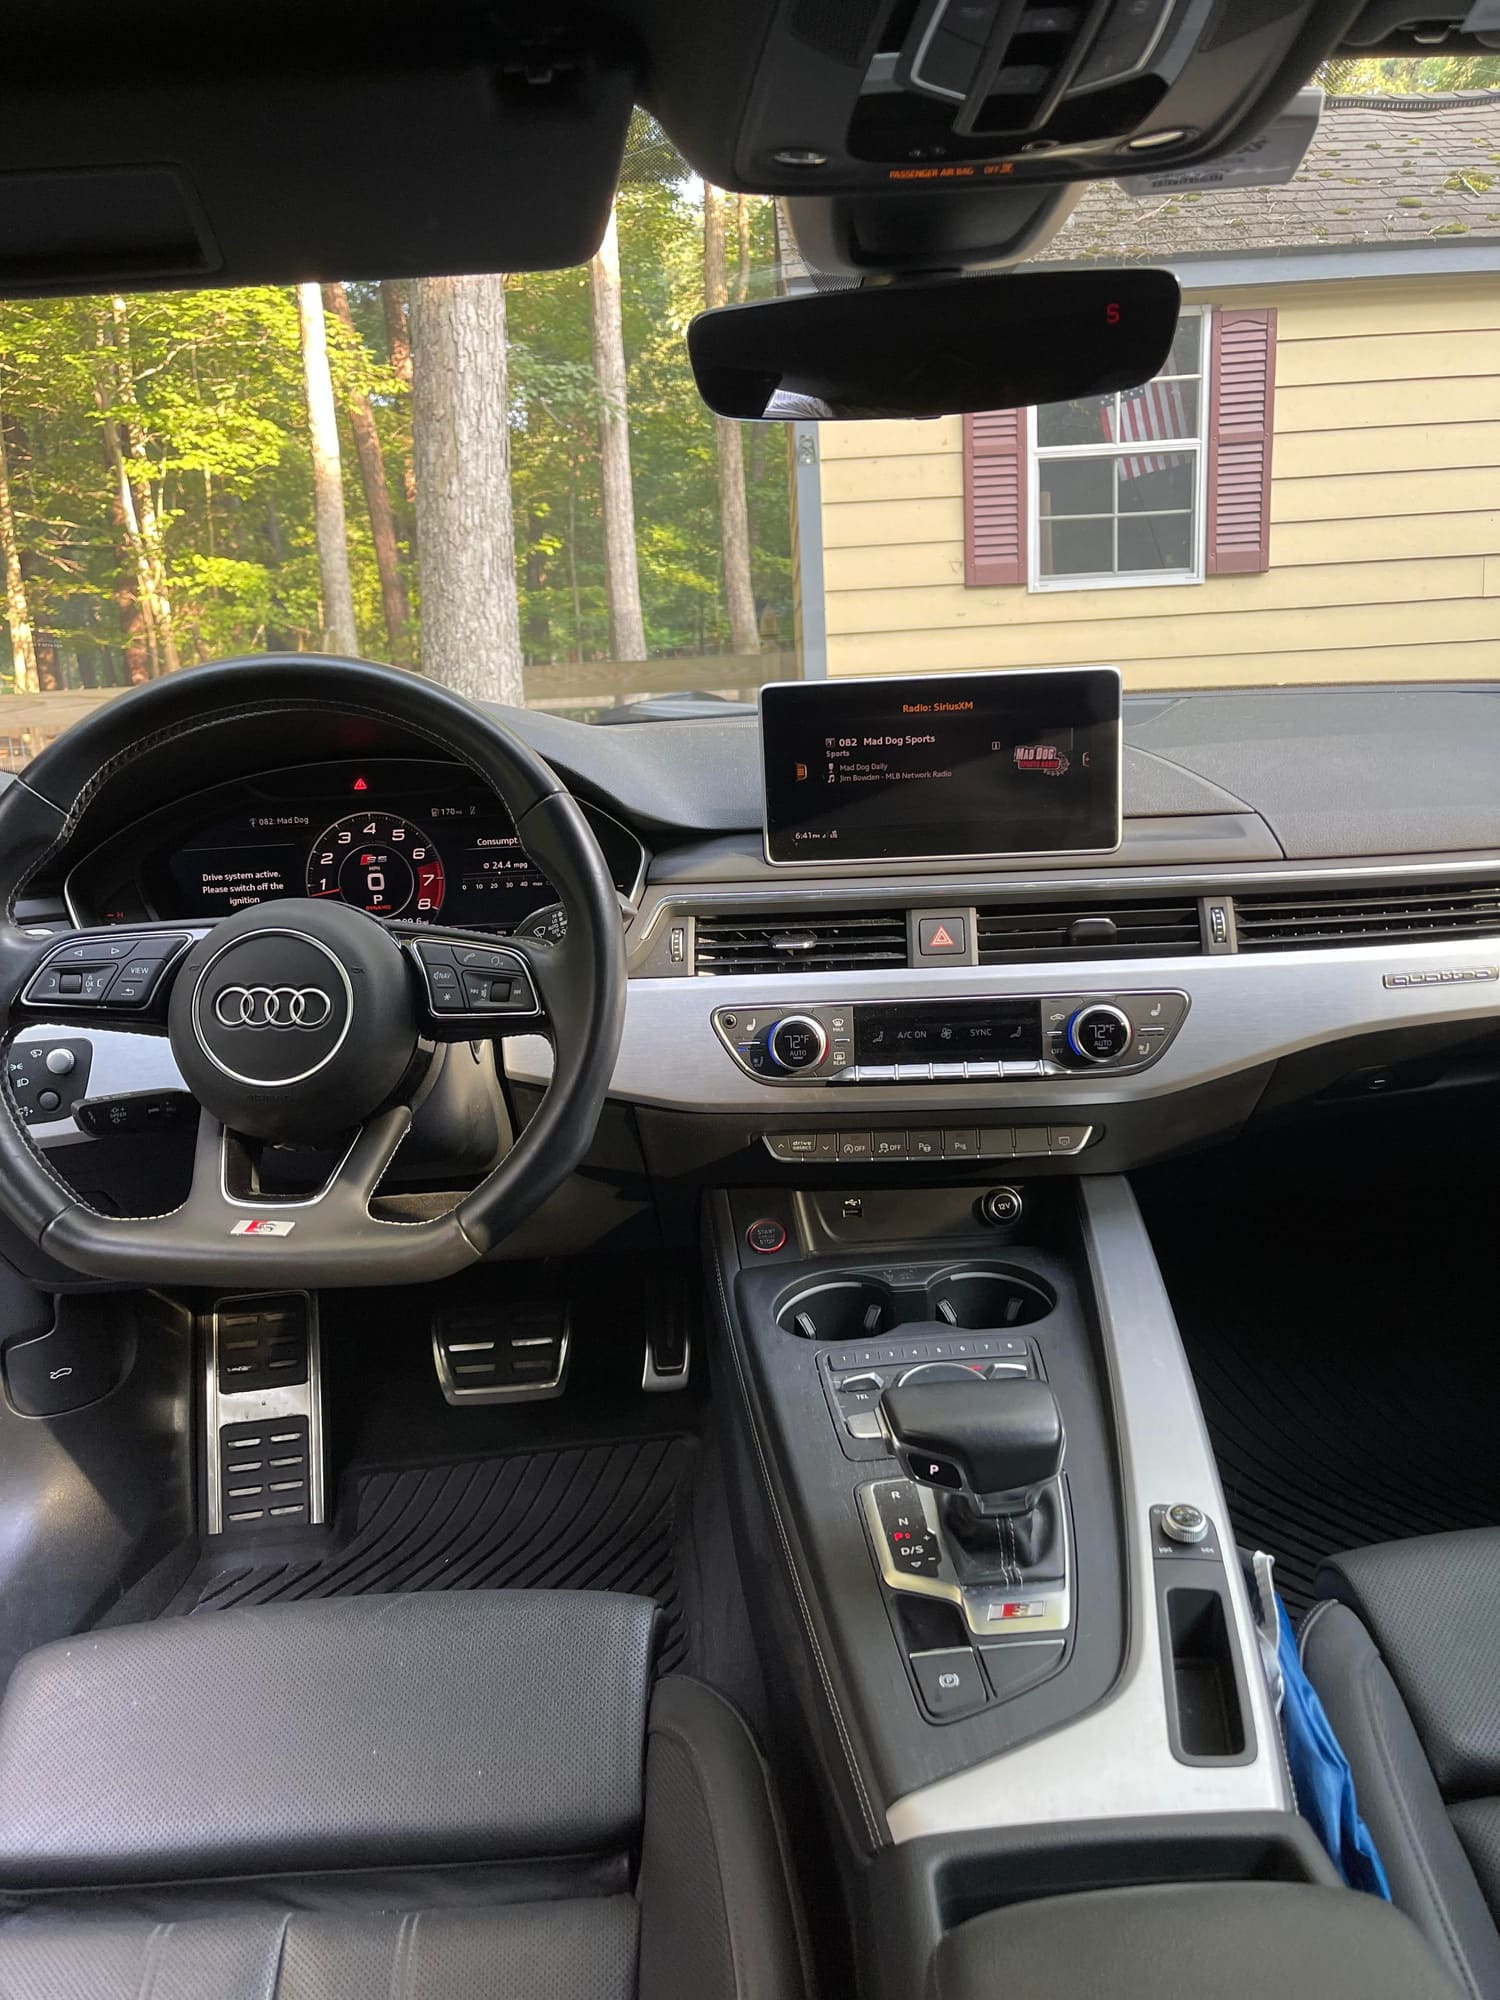 2019 Audi S5 Sportback - 2019 S5 Sportback Prestige - Quantum Grey - For Sale - Used - VIN WAUC4CF53KA047295 - 22,000 Miles - 6 cyl - AWD - Automatic - Hatchback - Gray - Richmond, VA 23113, United States